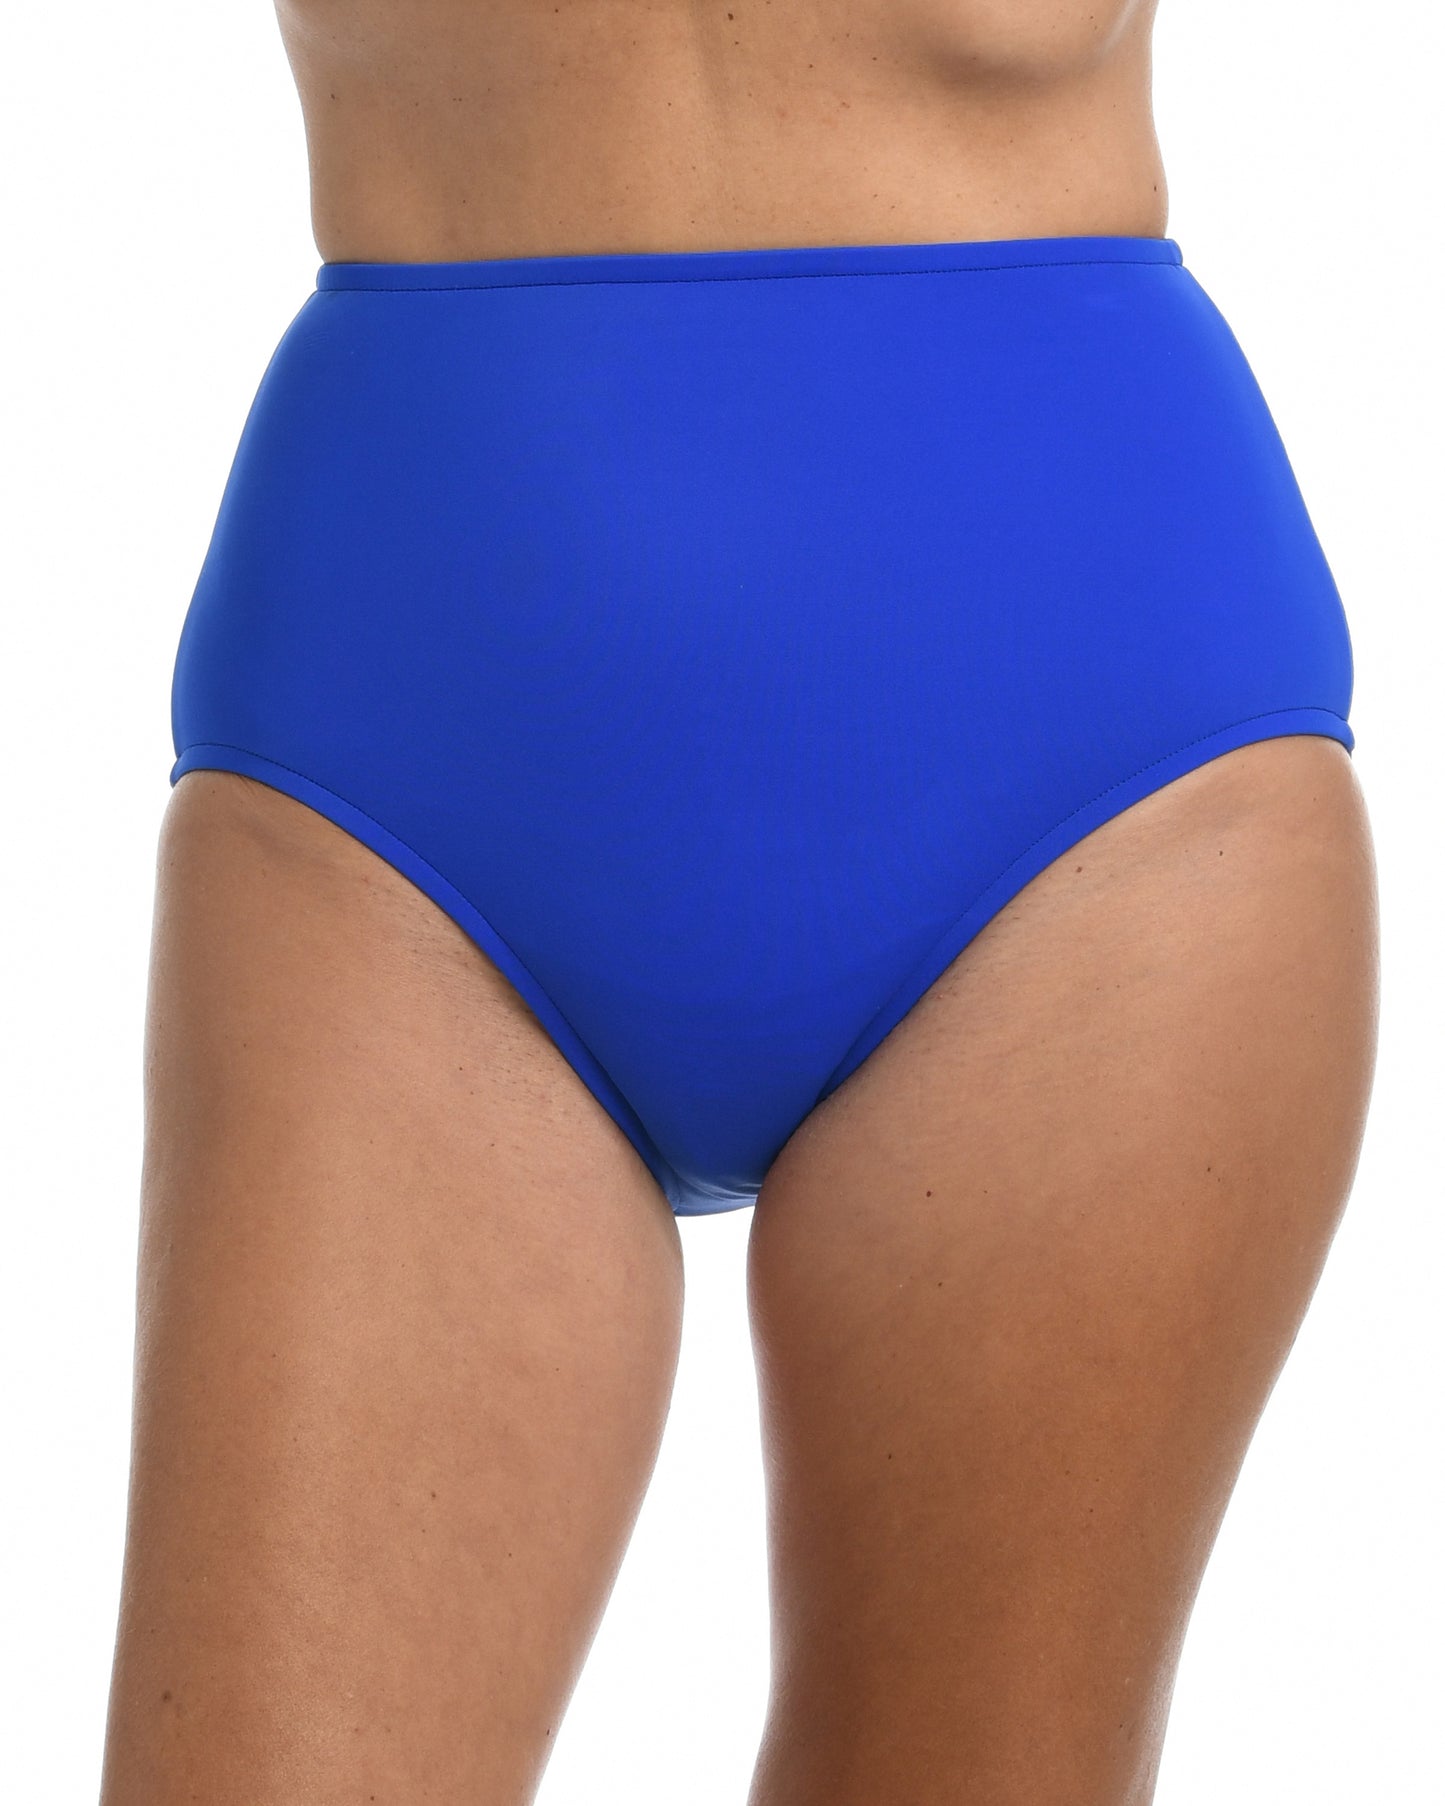 Model wearing a full brief bikini bottom in cobalt blue